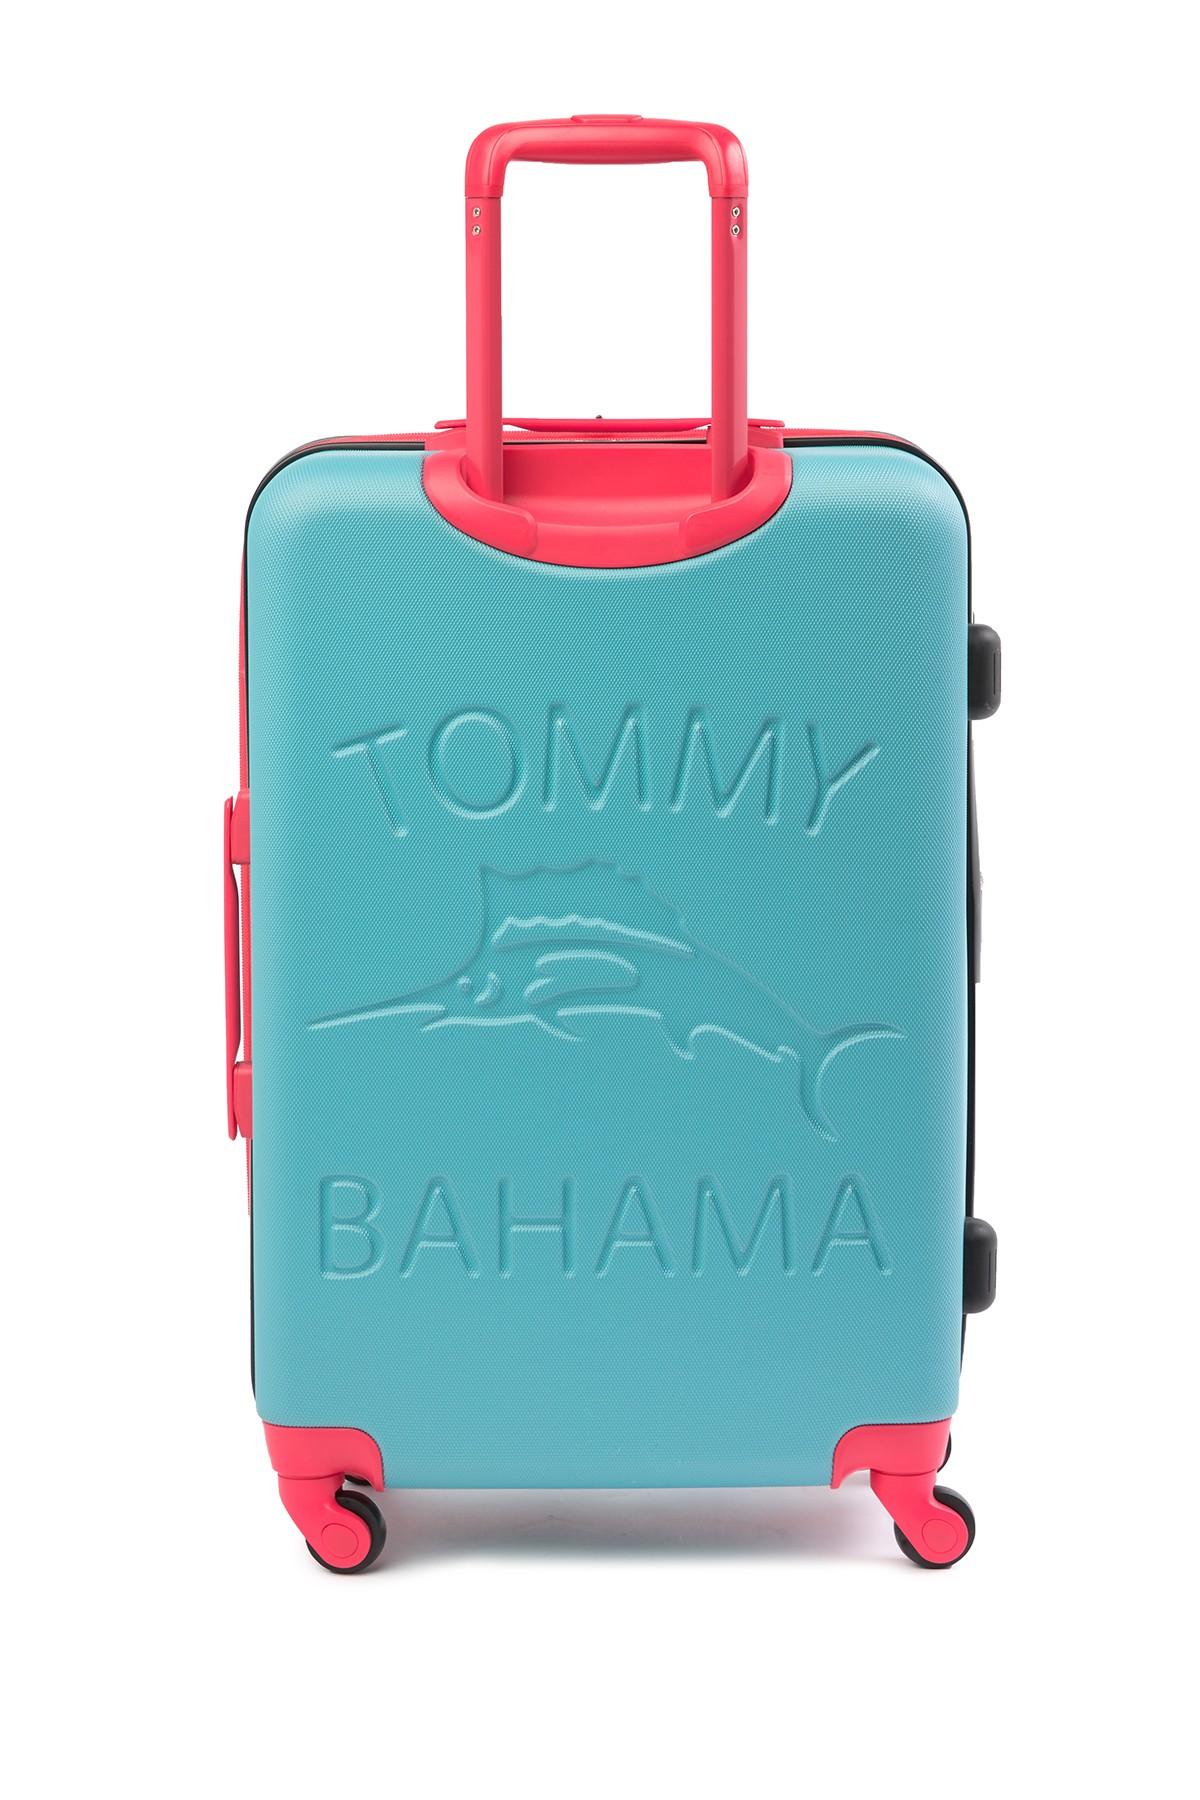 tommy bahama pink luggage